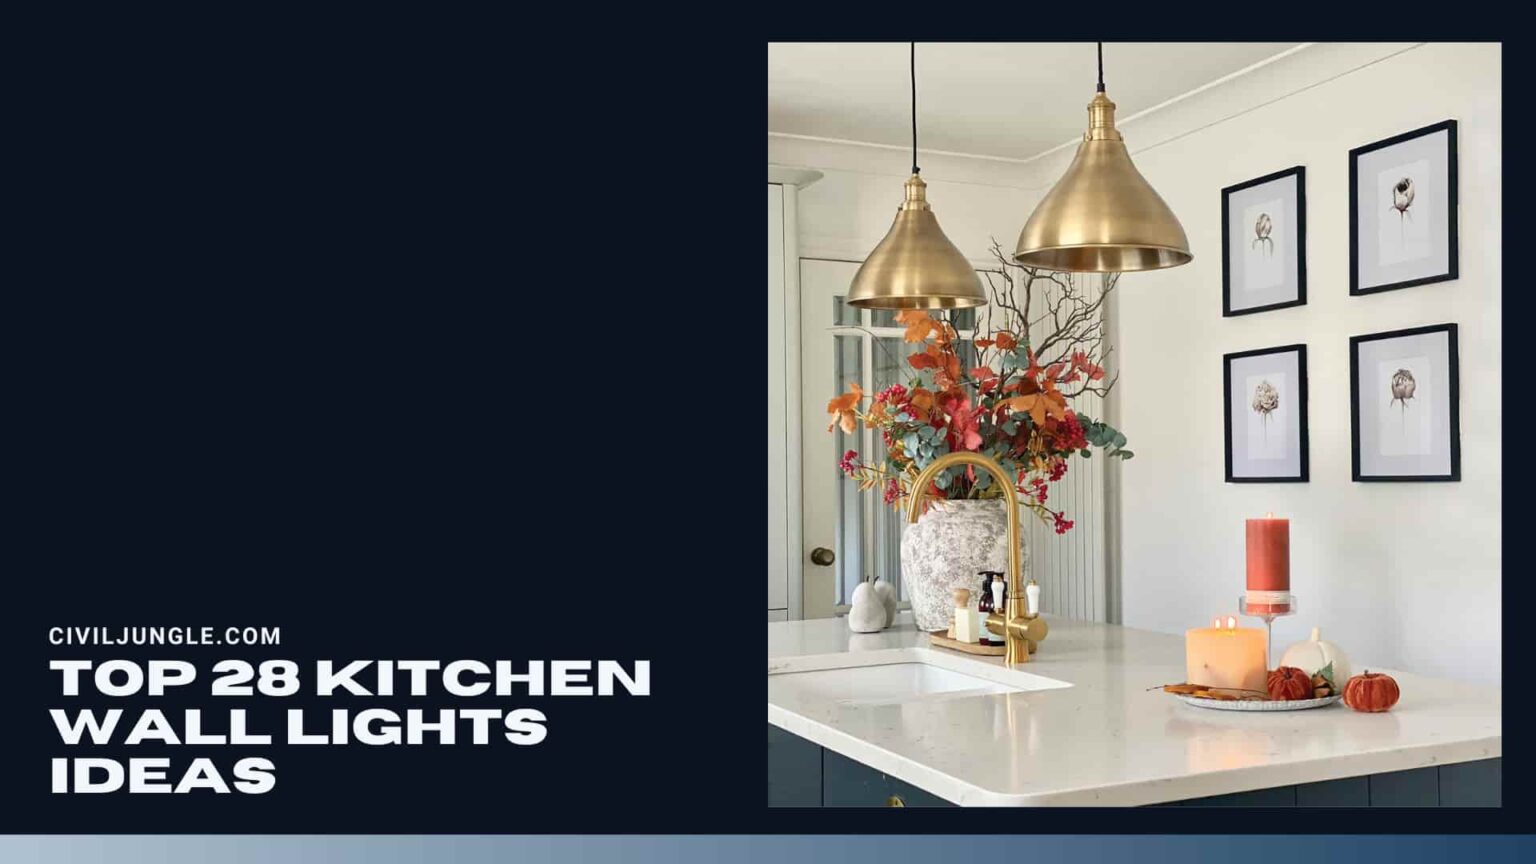 Top 28 Kitchen Wall Lights Ideas 1536x864 